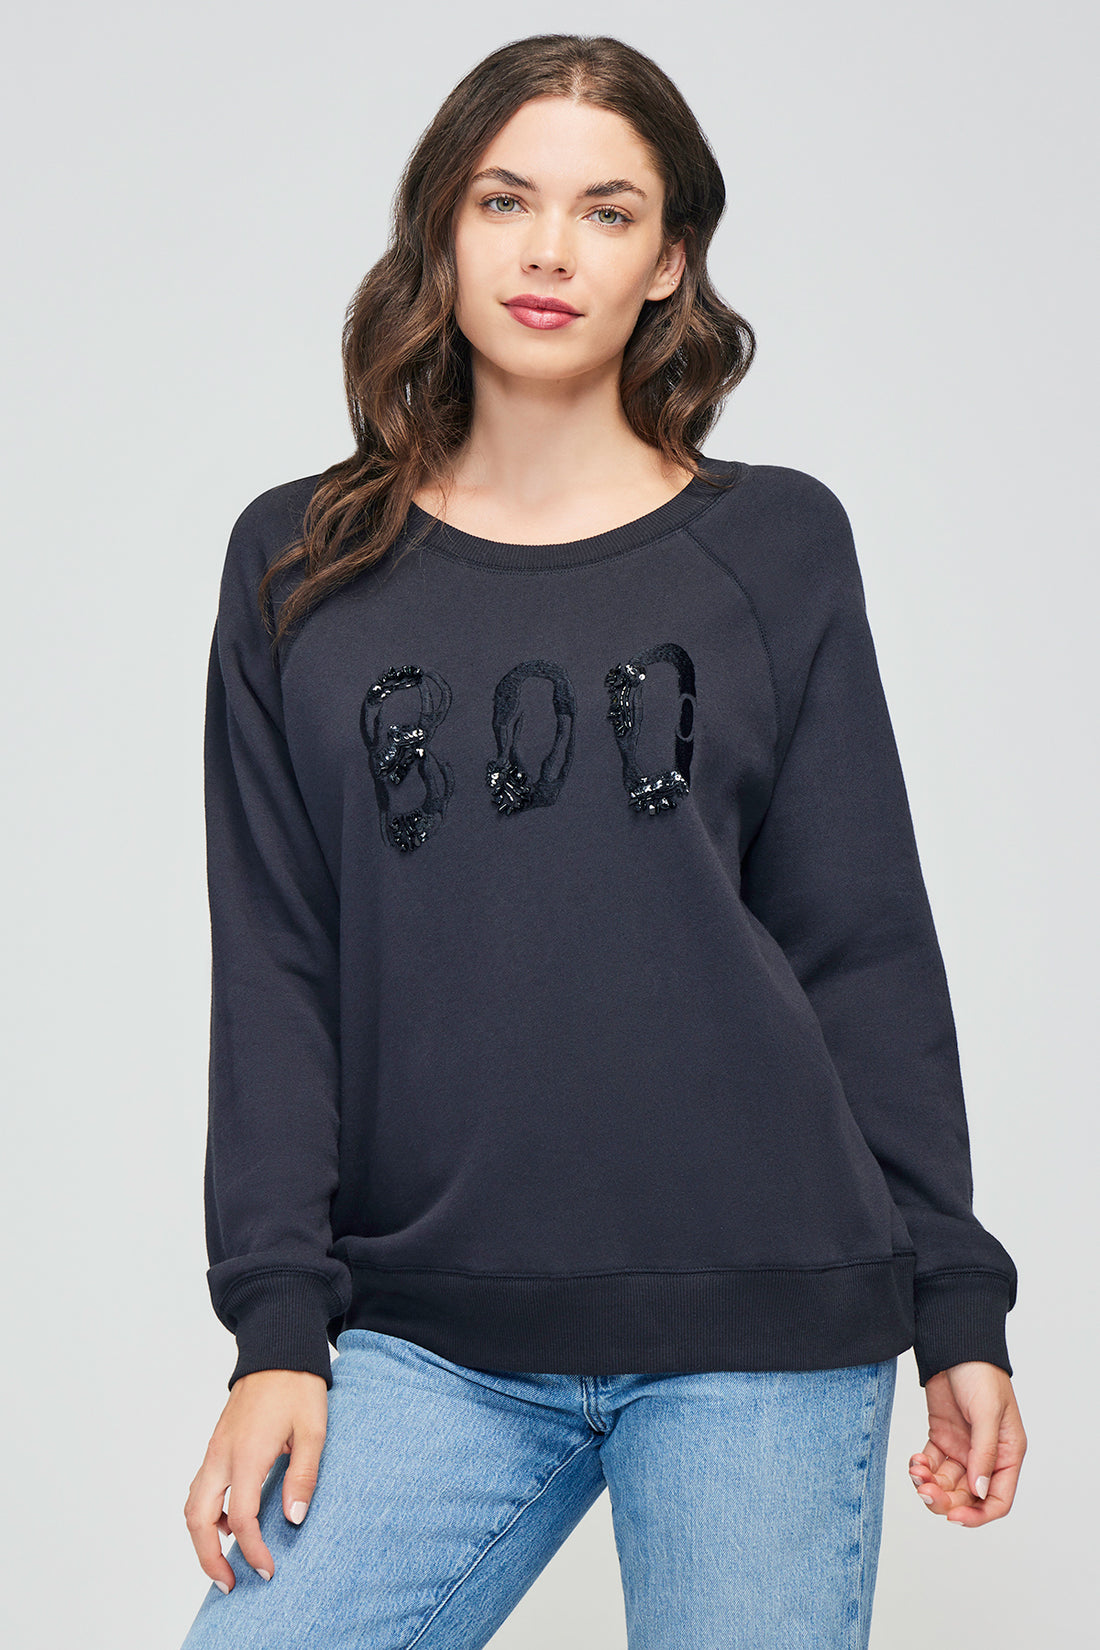 Boo Sommers Sweatshirt | Jet Black